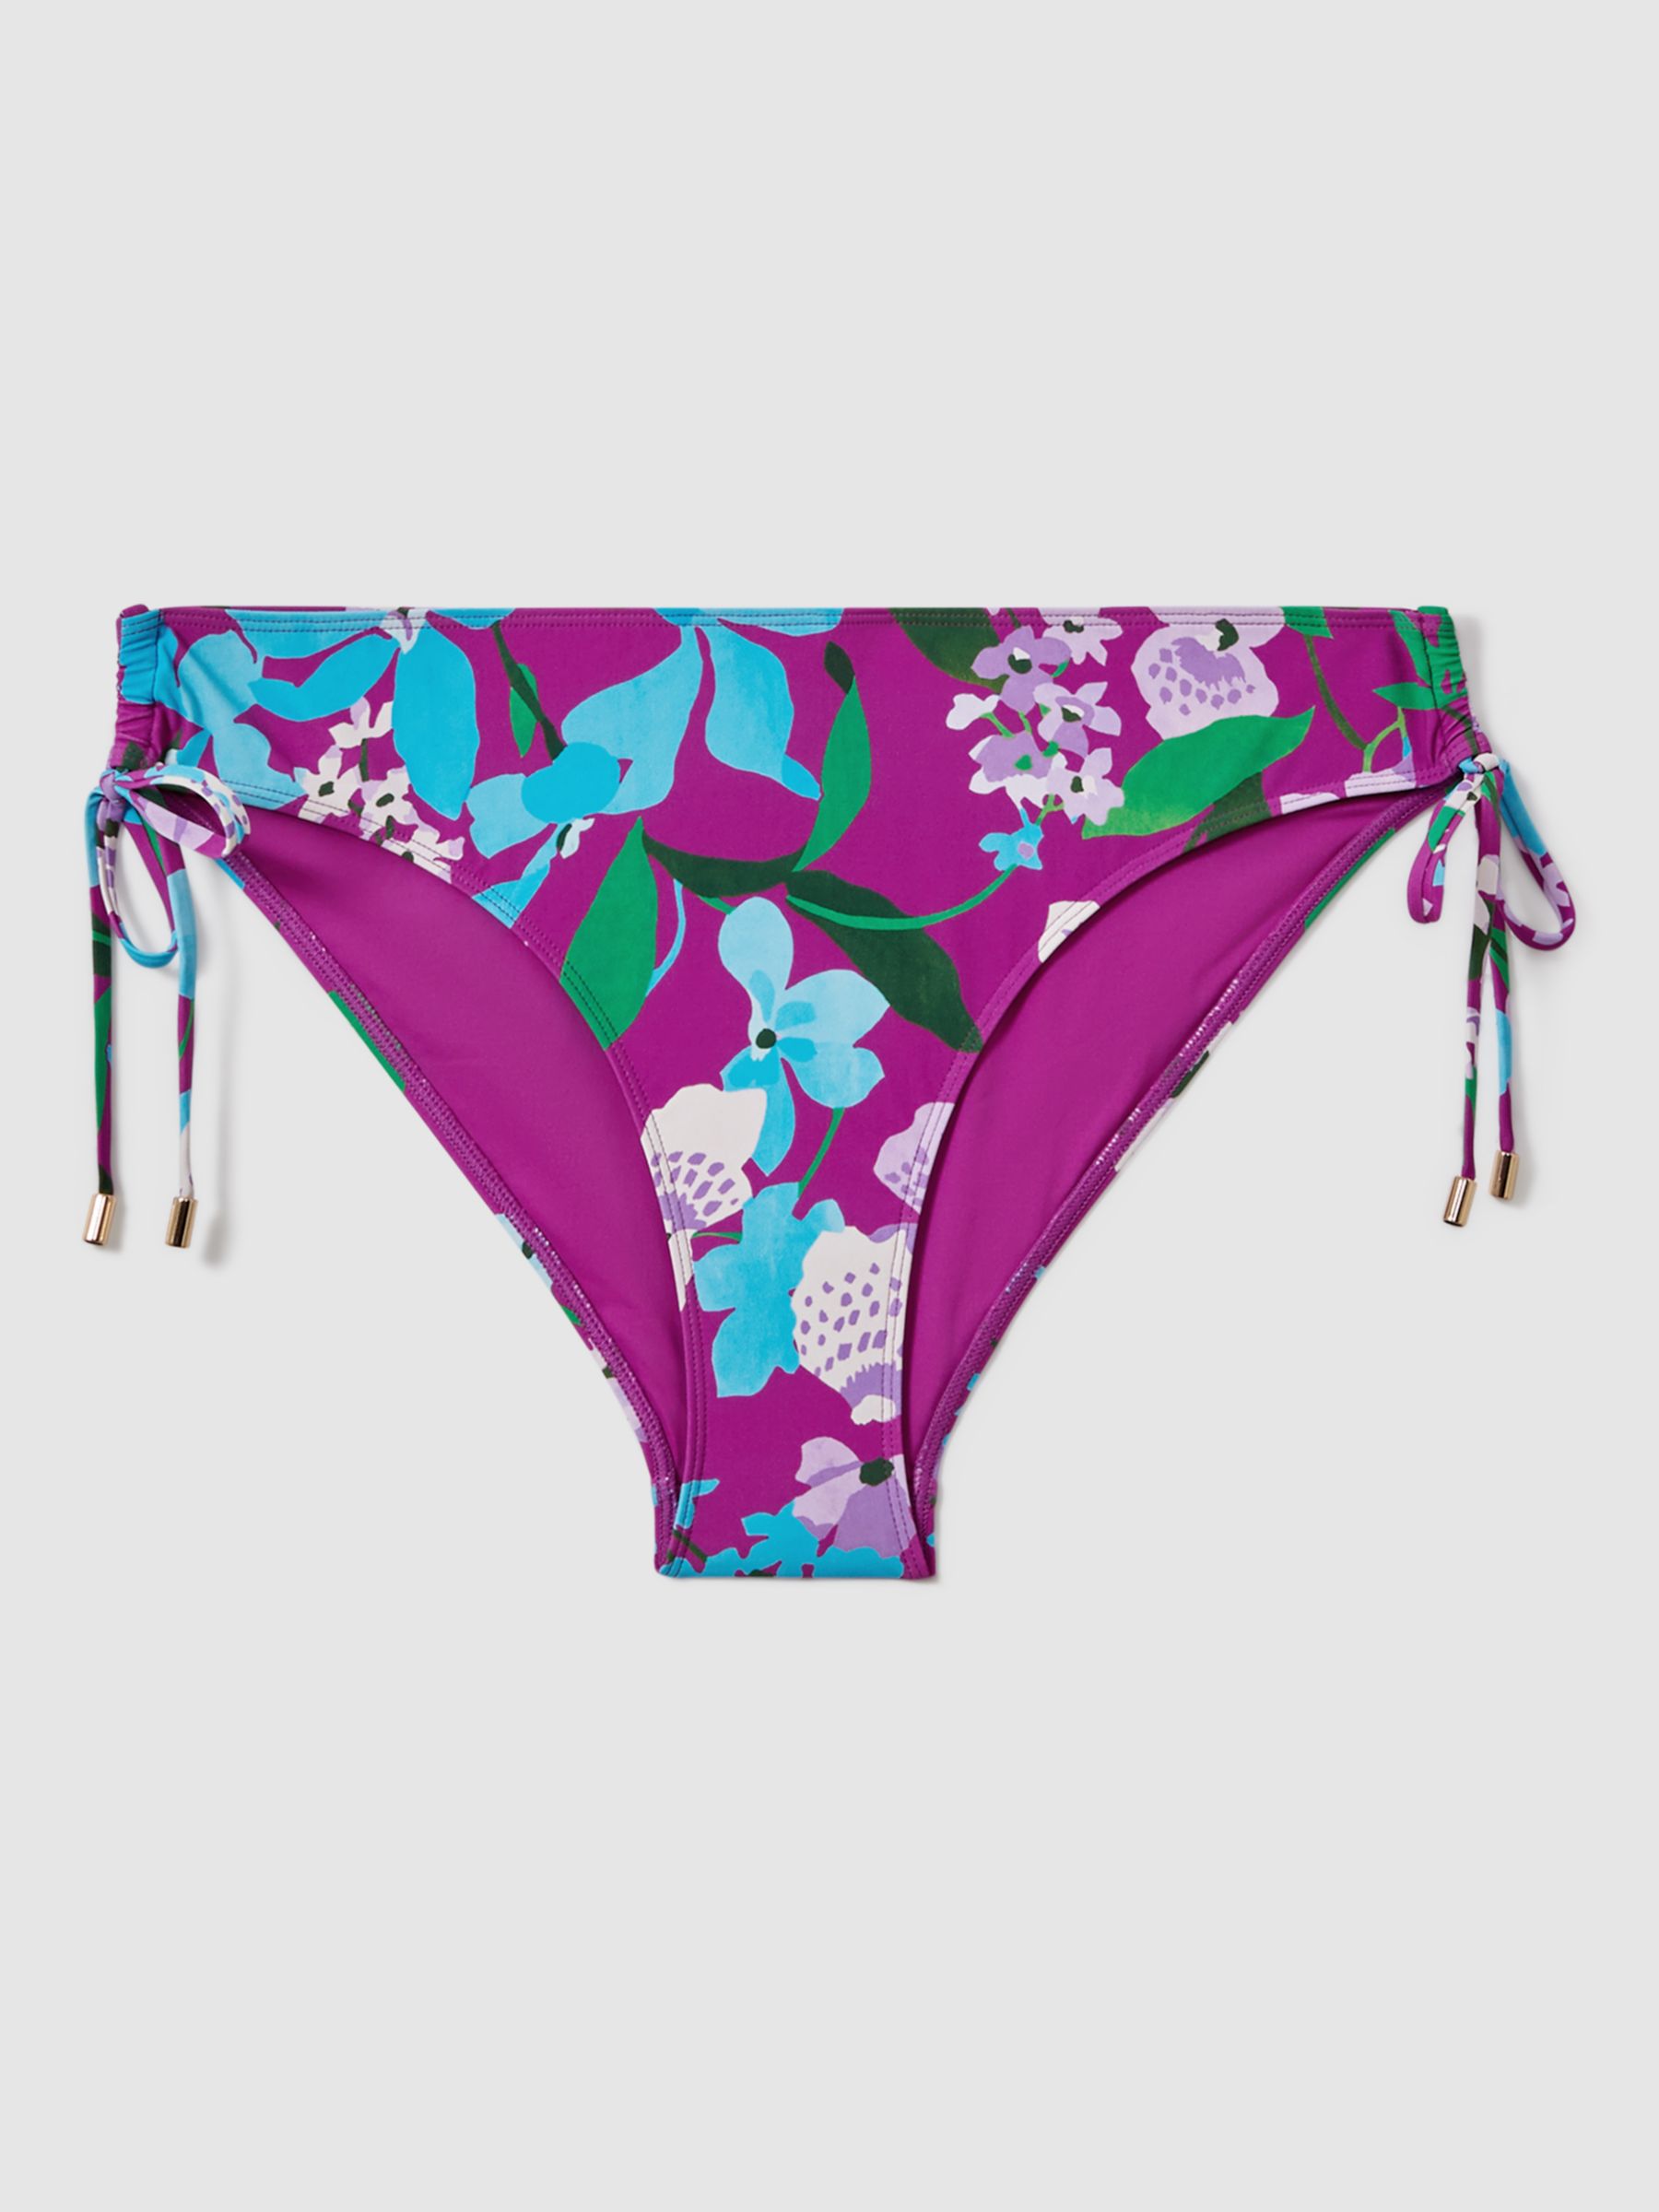 FLORERE Floral Print Side Ruched Bikini Bottoms, Multi, 8